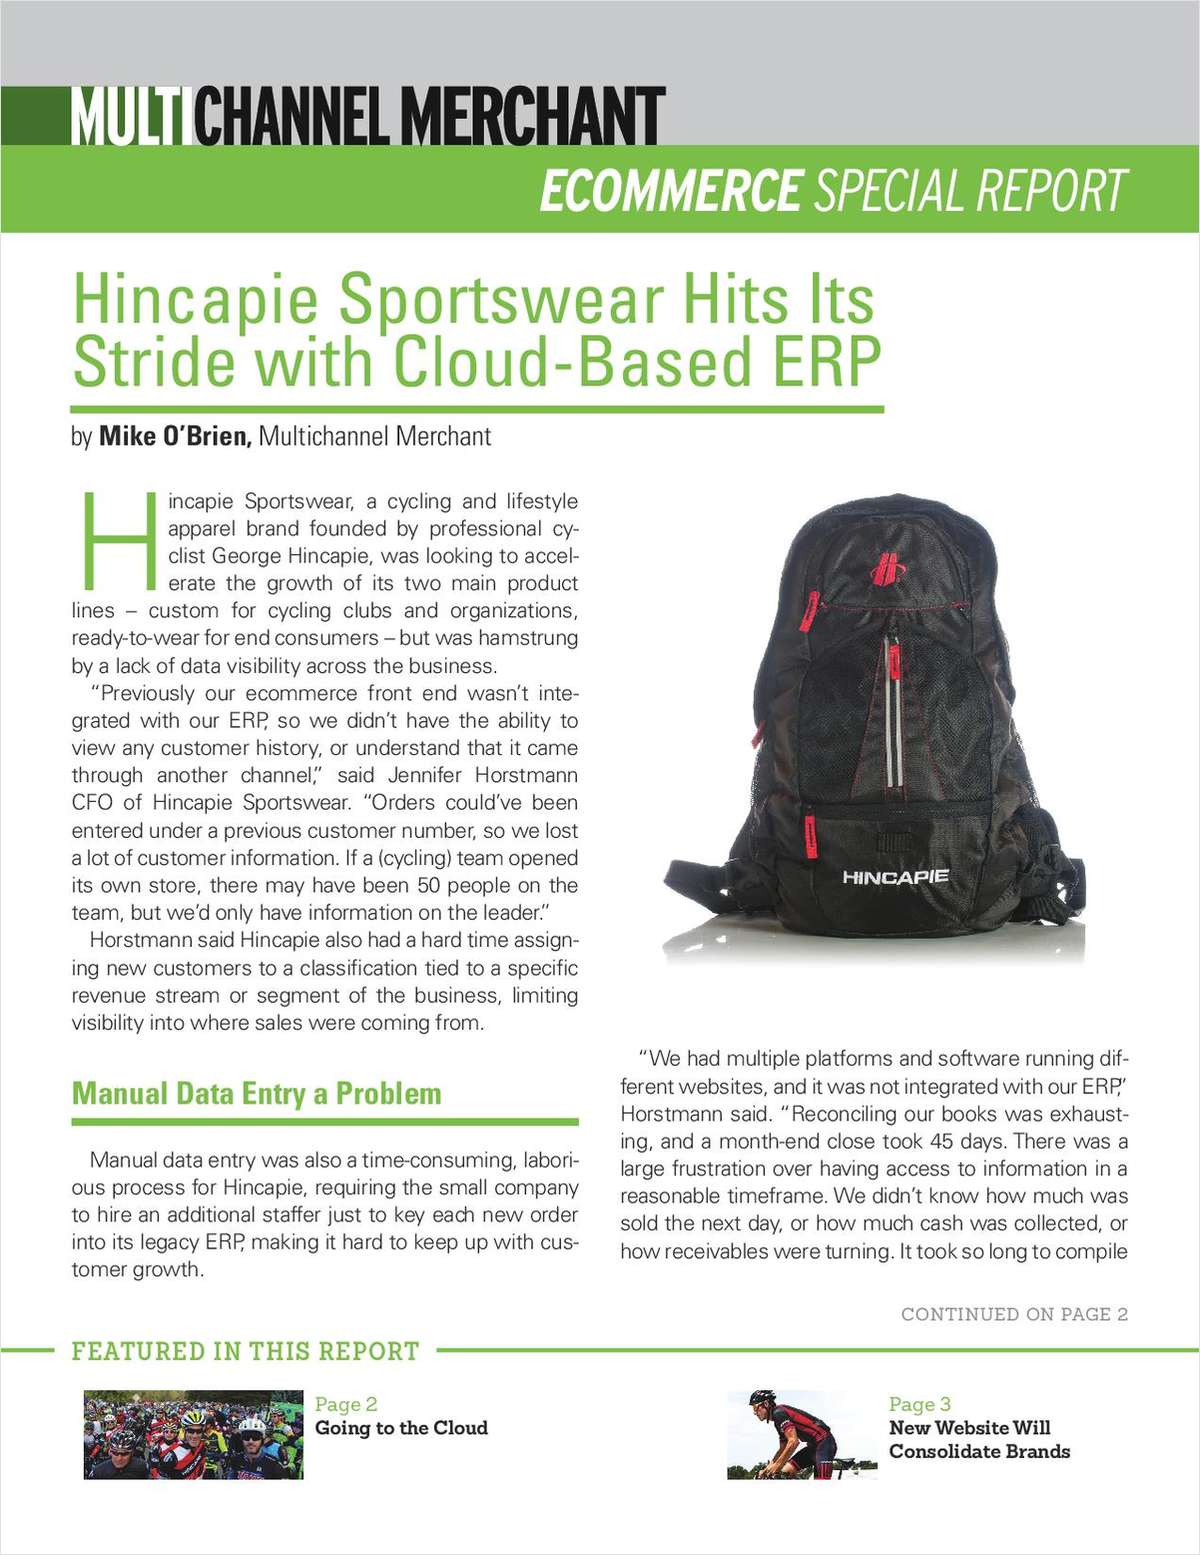 Hincapie Sportswear Finds Omnichannel Success in the Cloud